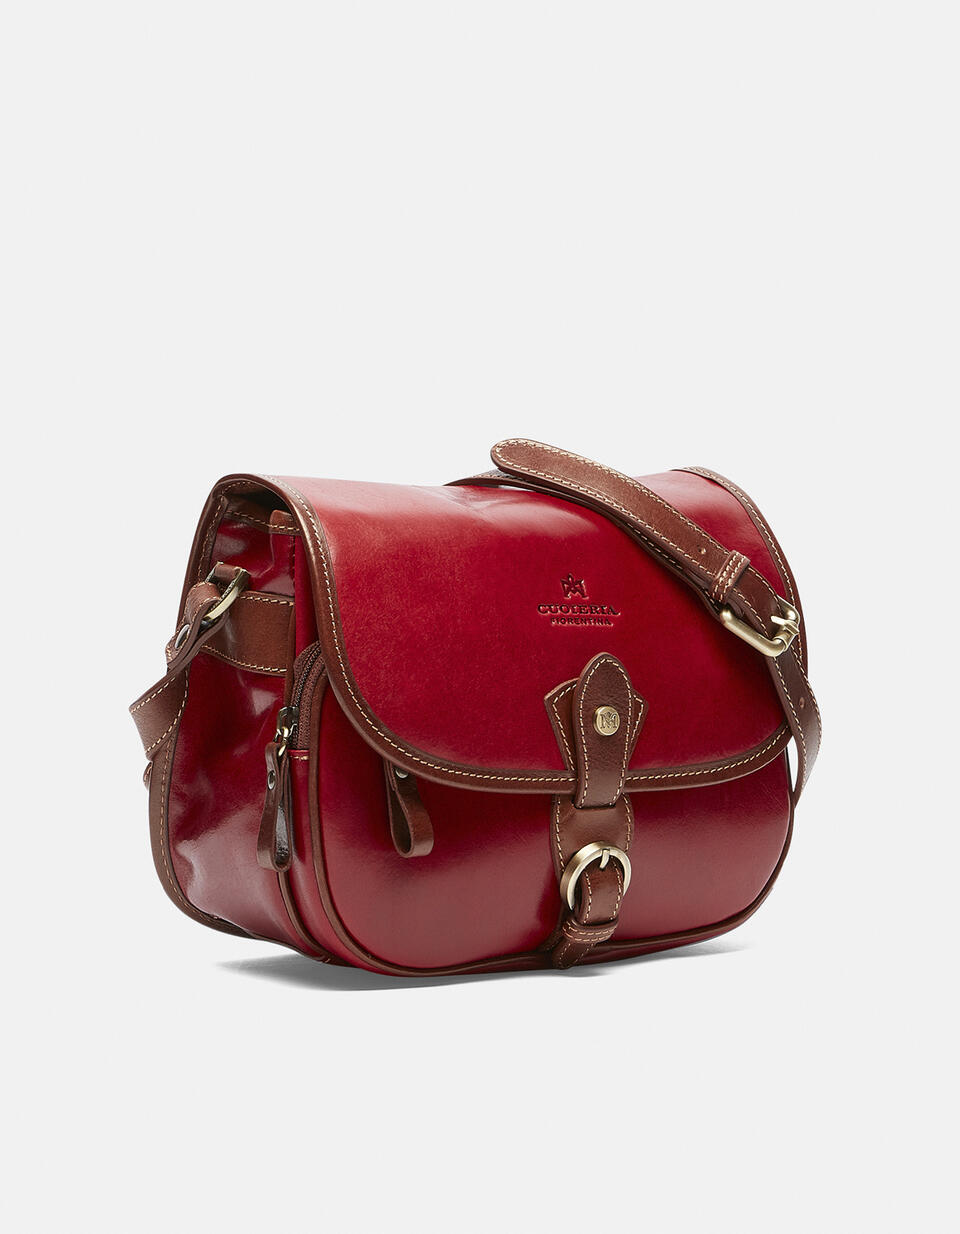 Leather Messenger bag - Messenger Bags - WOMEN'S BAGS | bags ROSSOBICOLORE - Messenger Bags - WOMEN'S BAGS | bagsCuoieria Fiorentina